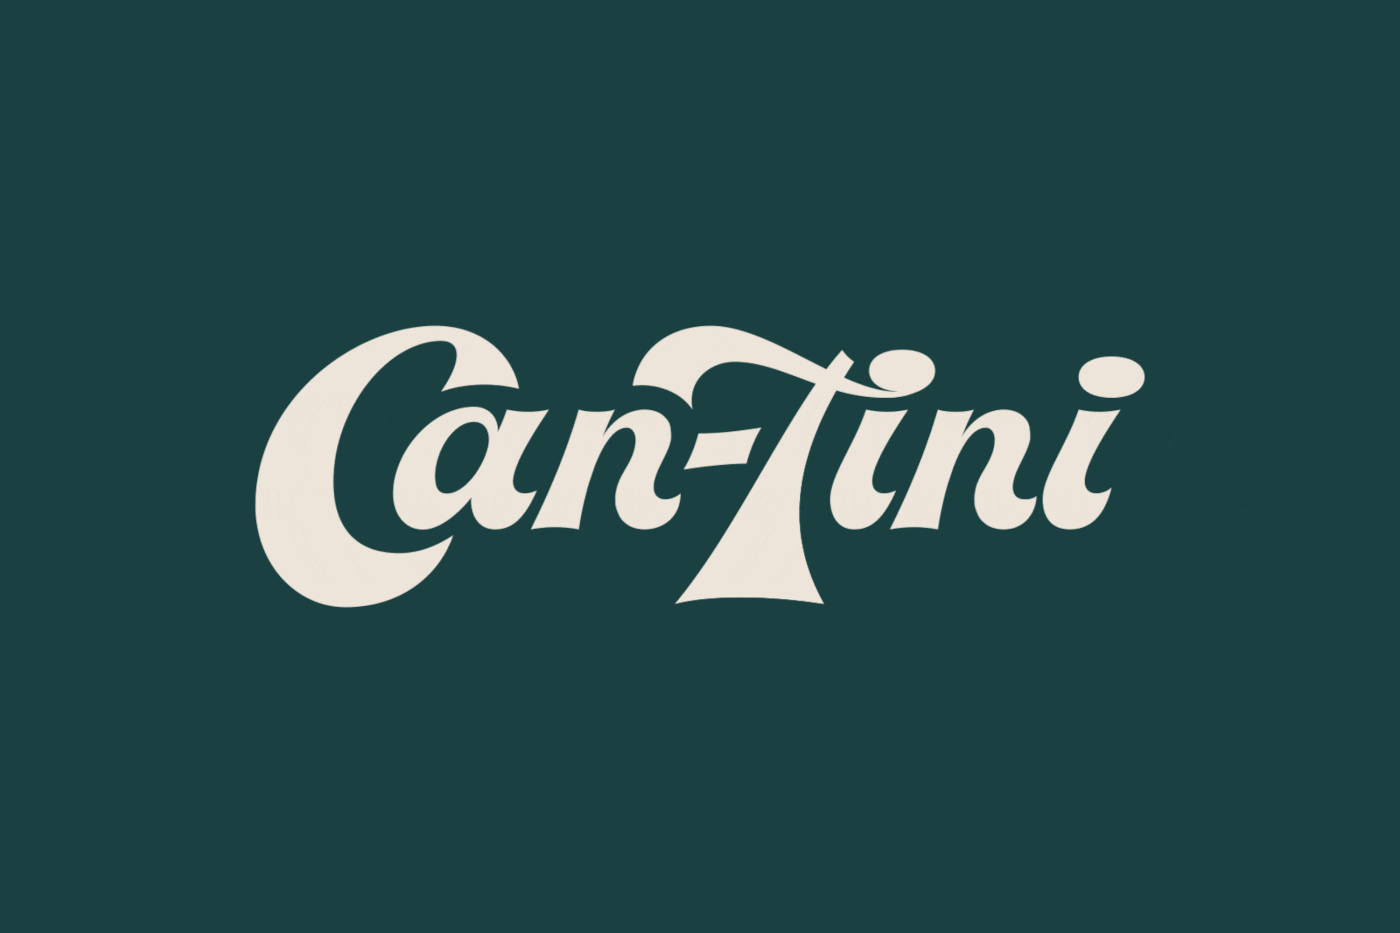 alcohol branding cantini cocktail design espresso martini logo drink branding Packaging brand identity Logo Design